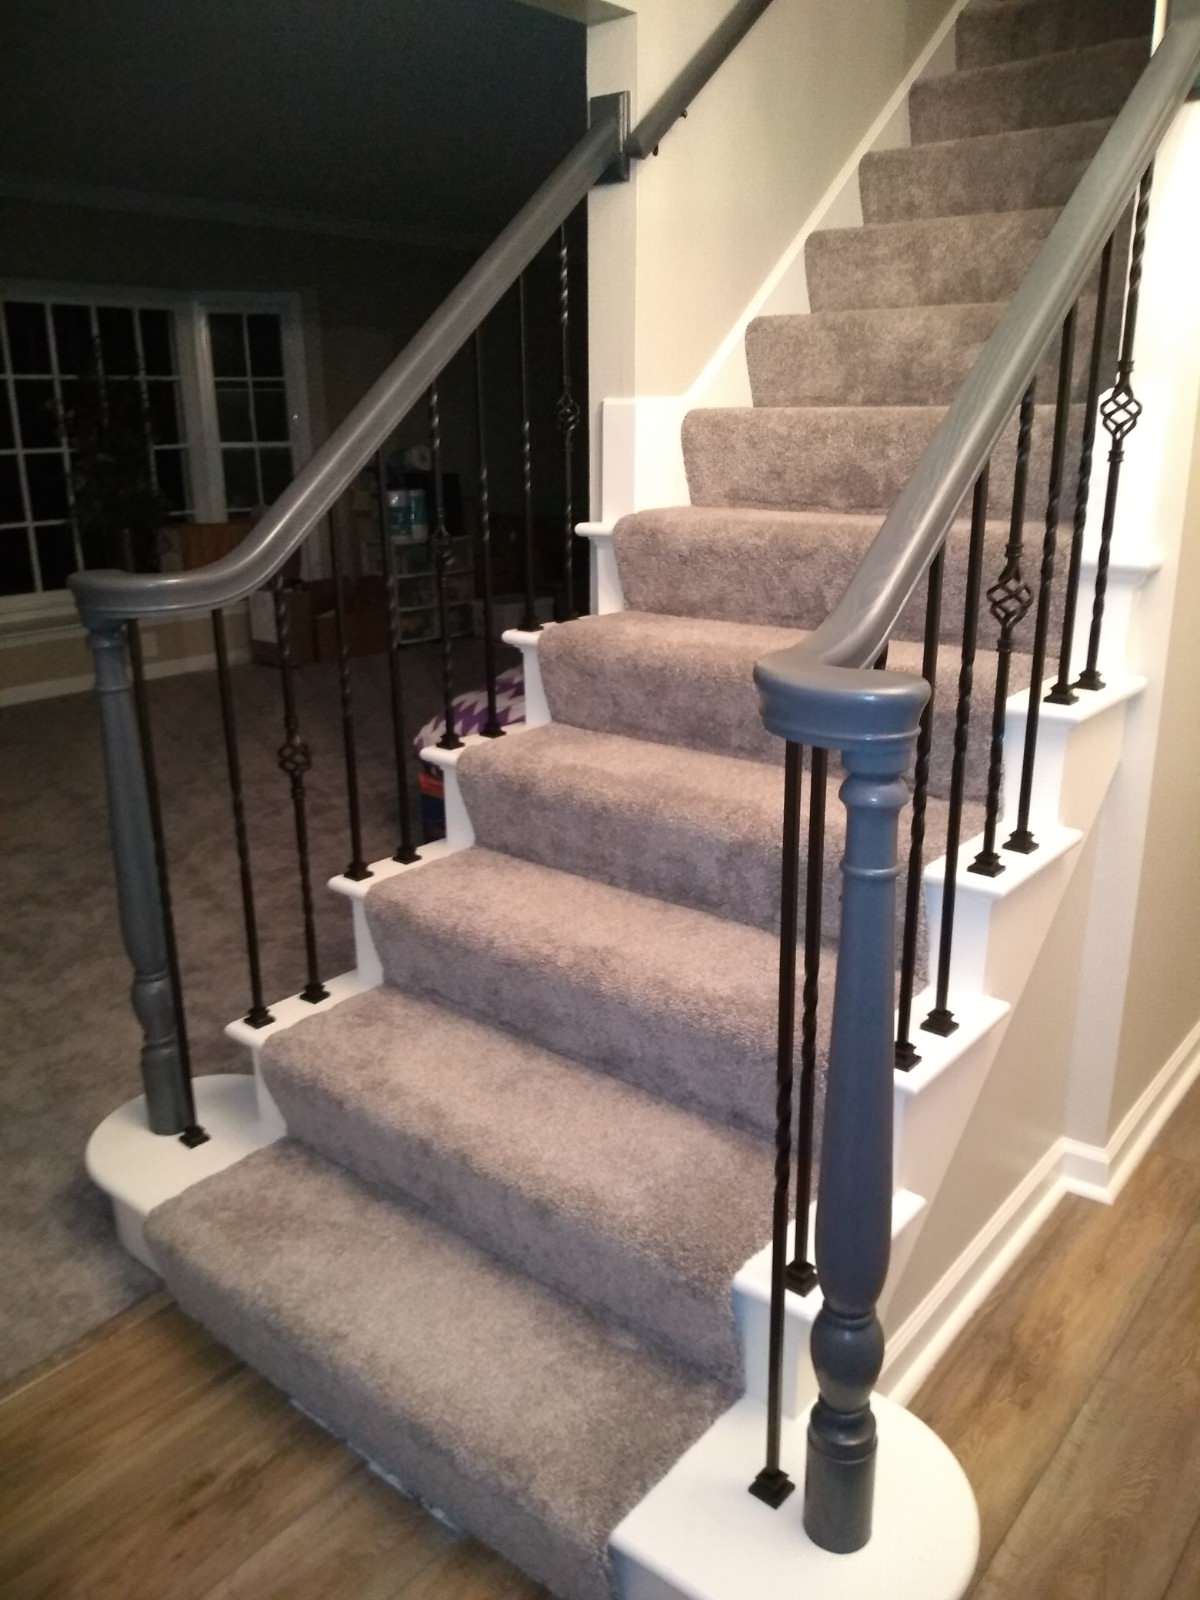 Modernized stairs - contemporary gray